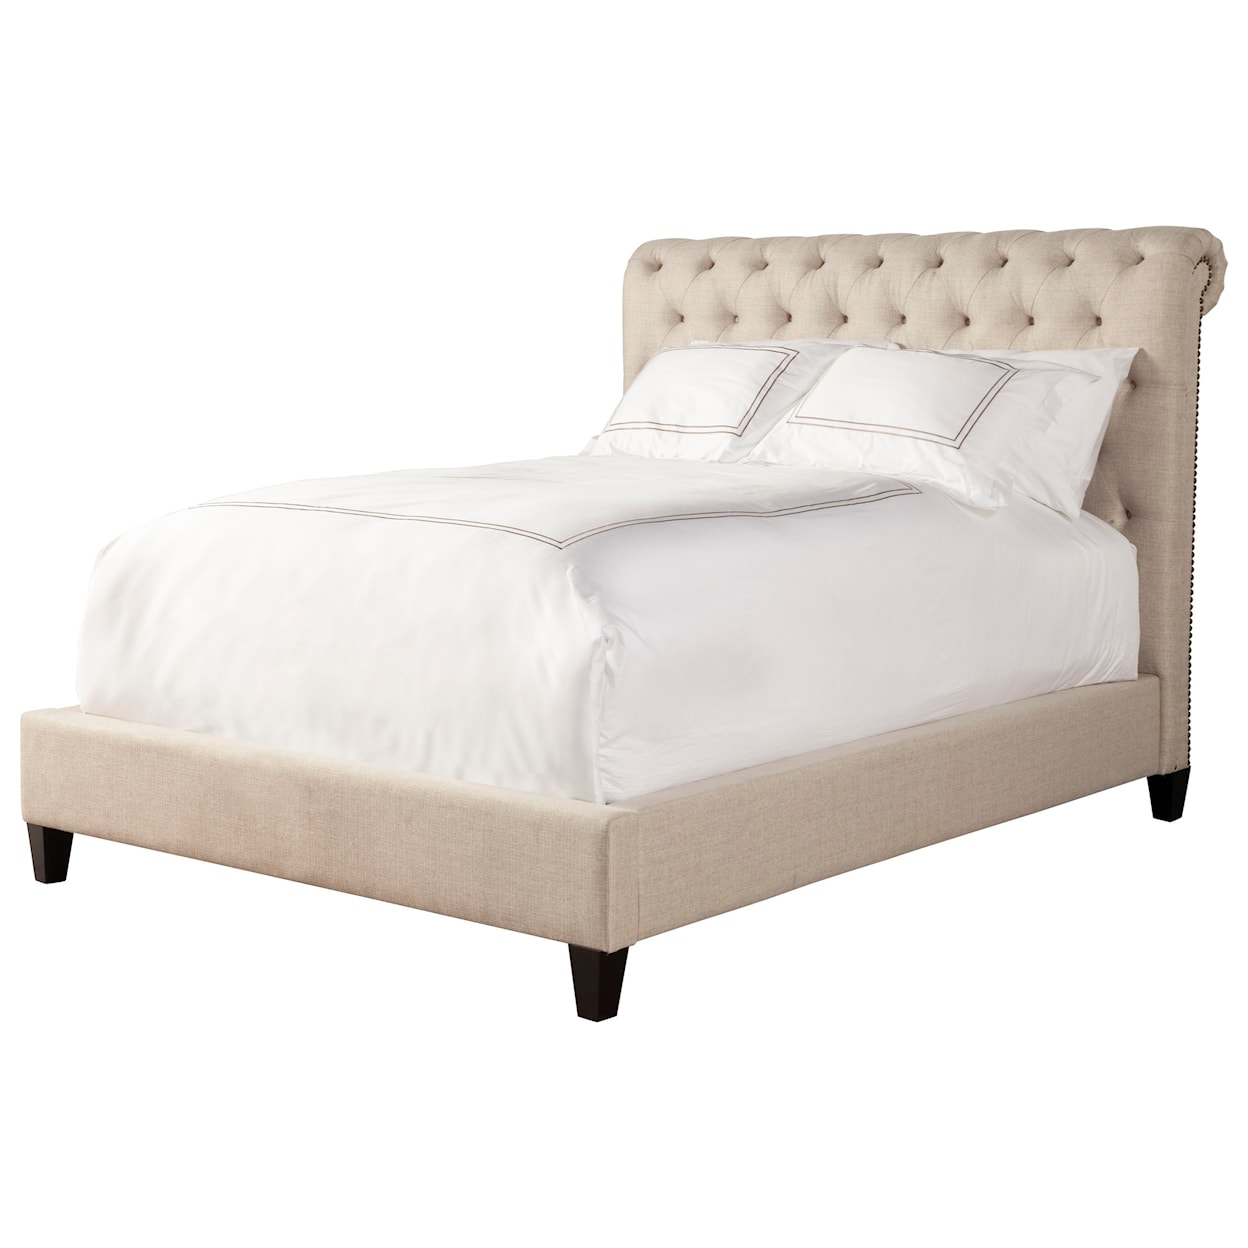 Parker Living Cameron Queen Upholstered Bed